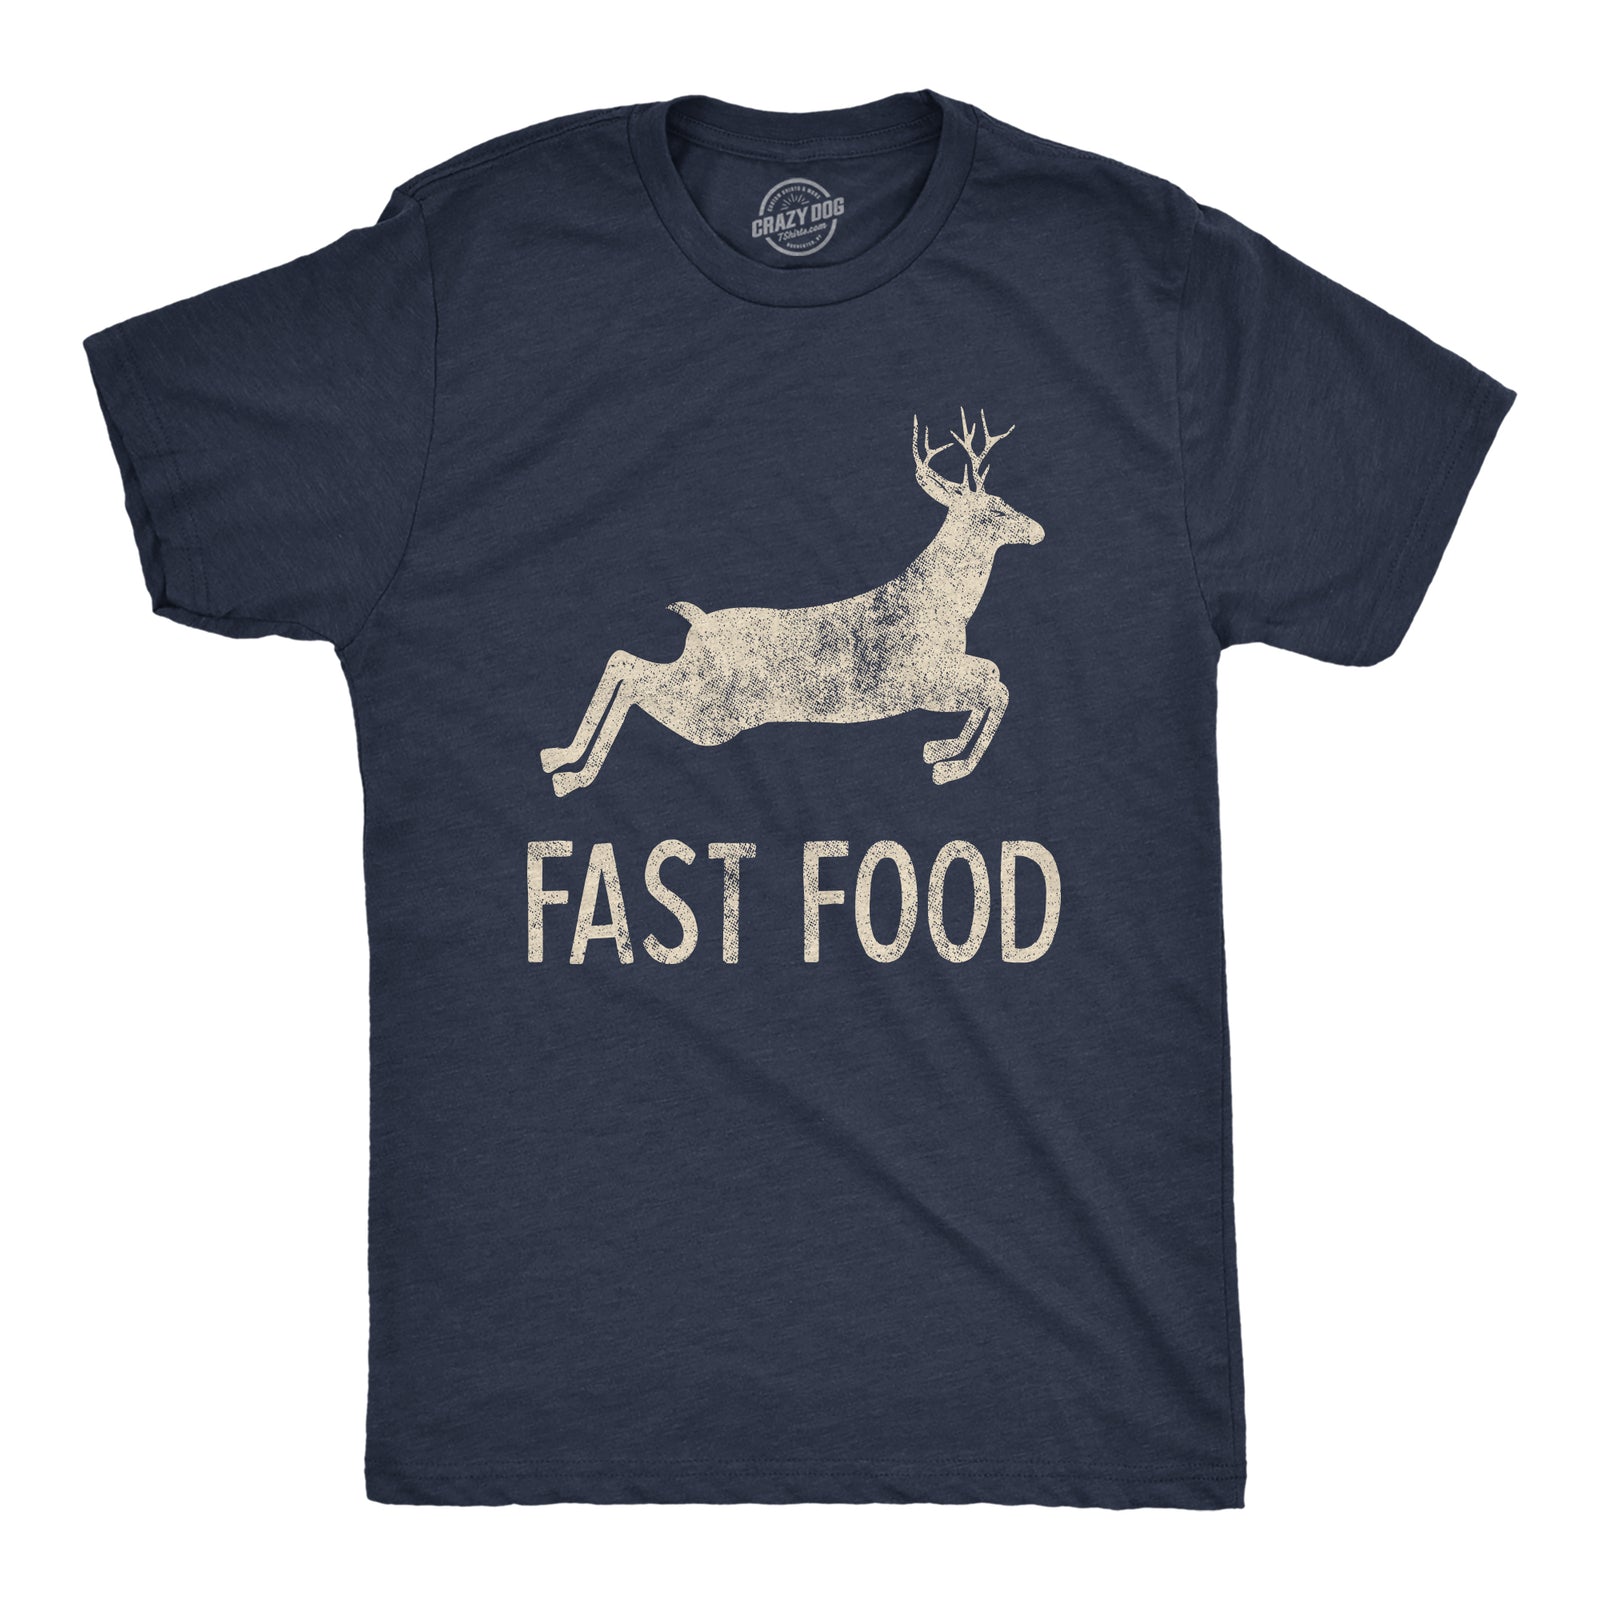 Mens I Like Big Bucks And I Cannot Lie Boxers Funny Deer Hunting Lyric –  Nerdy Shirts